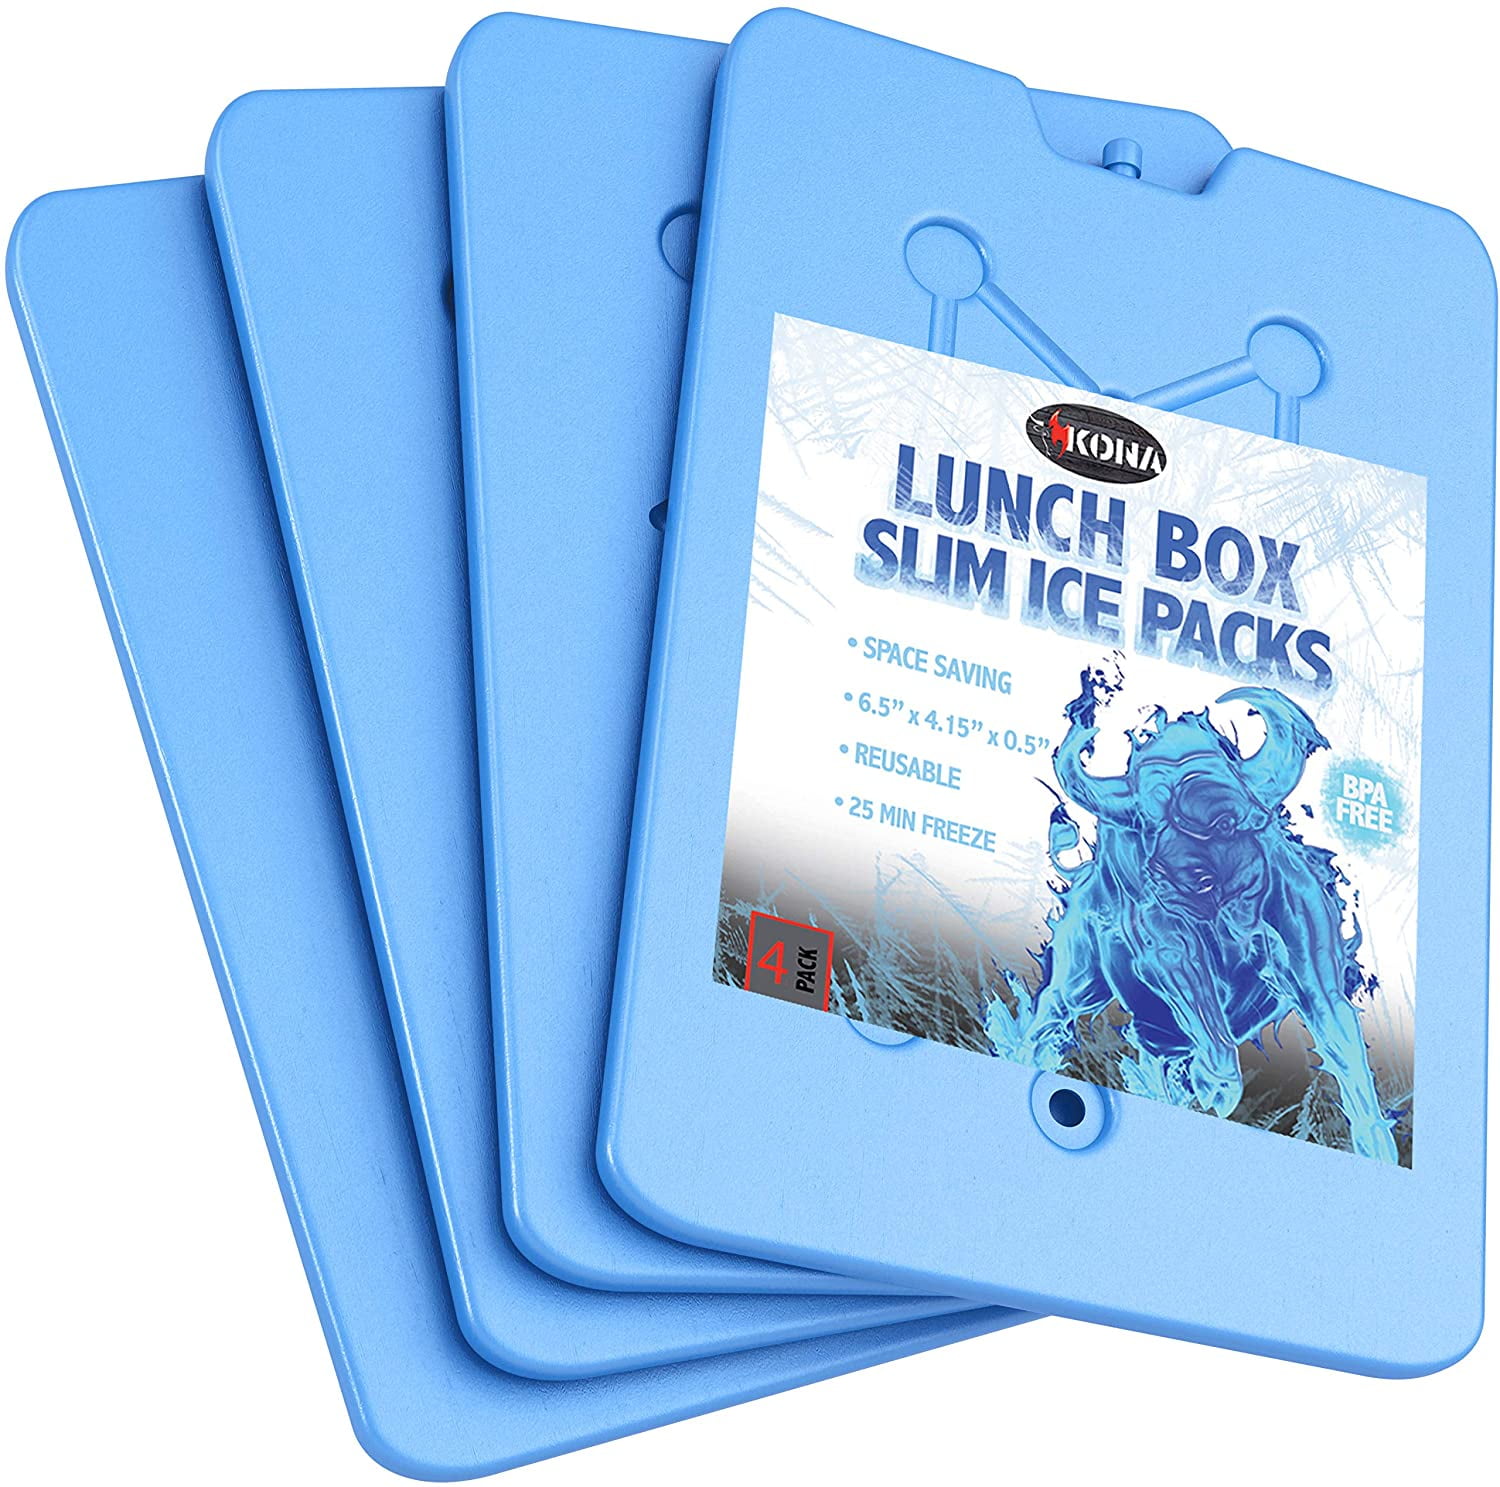 Kona BBQ Lunch Box Slim Ice Packs - Blue, Reusable Freezer Packs